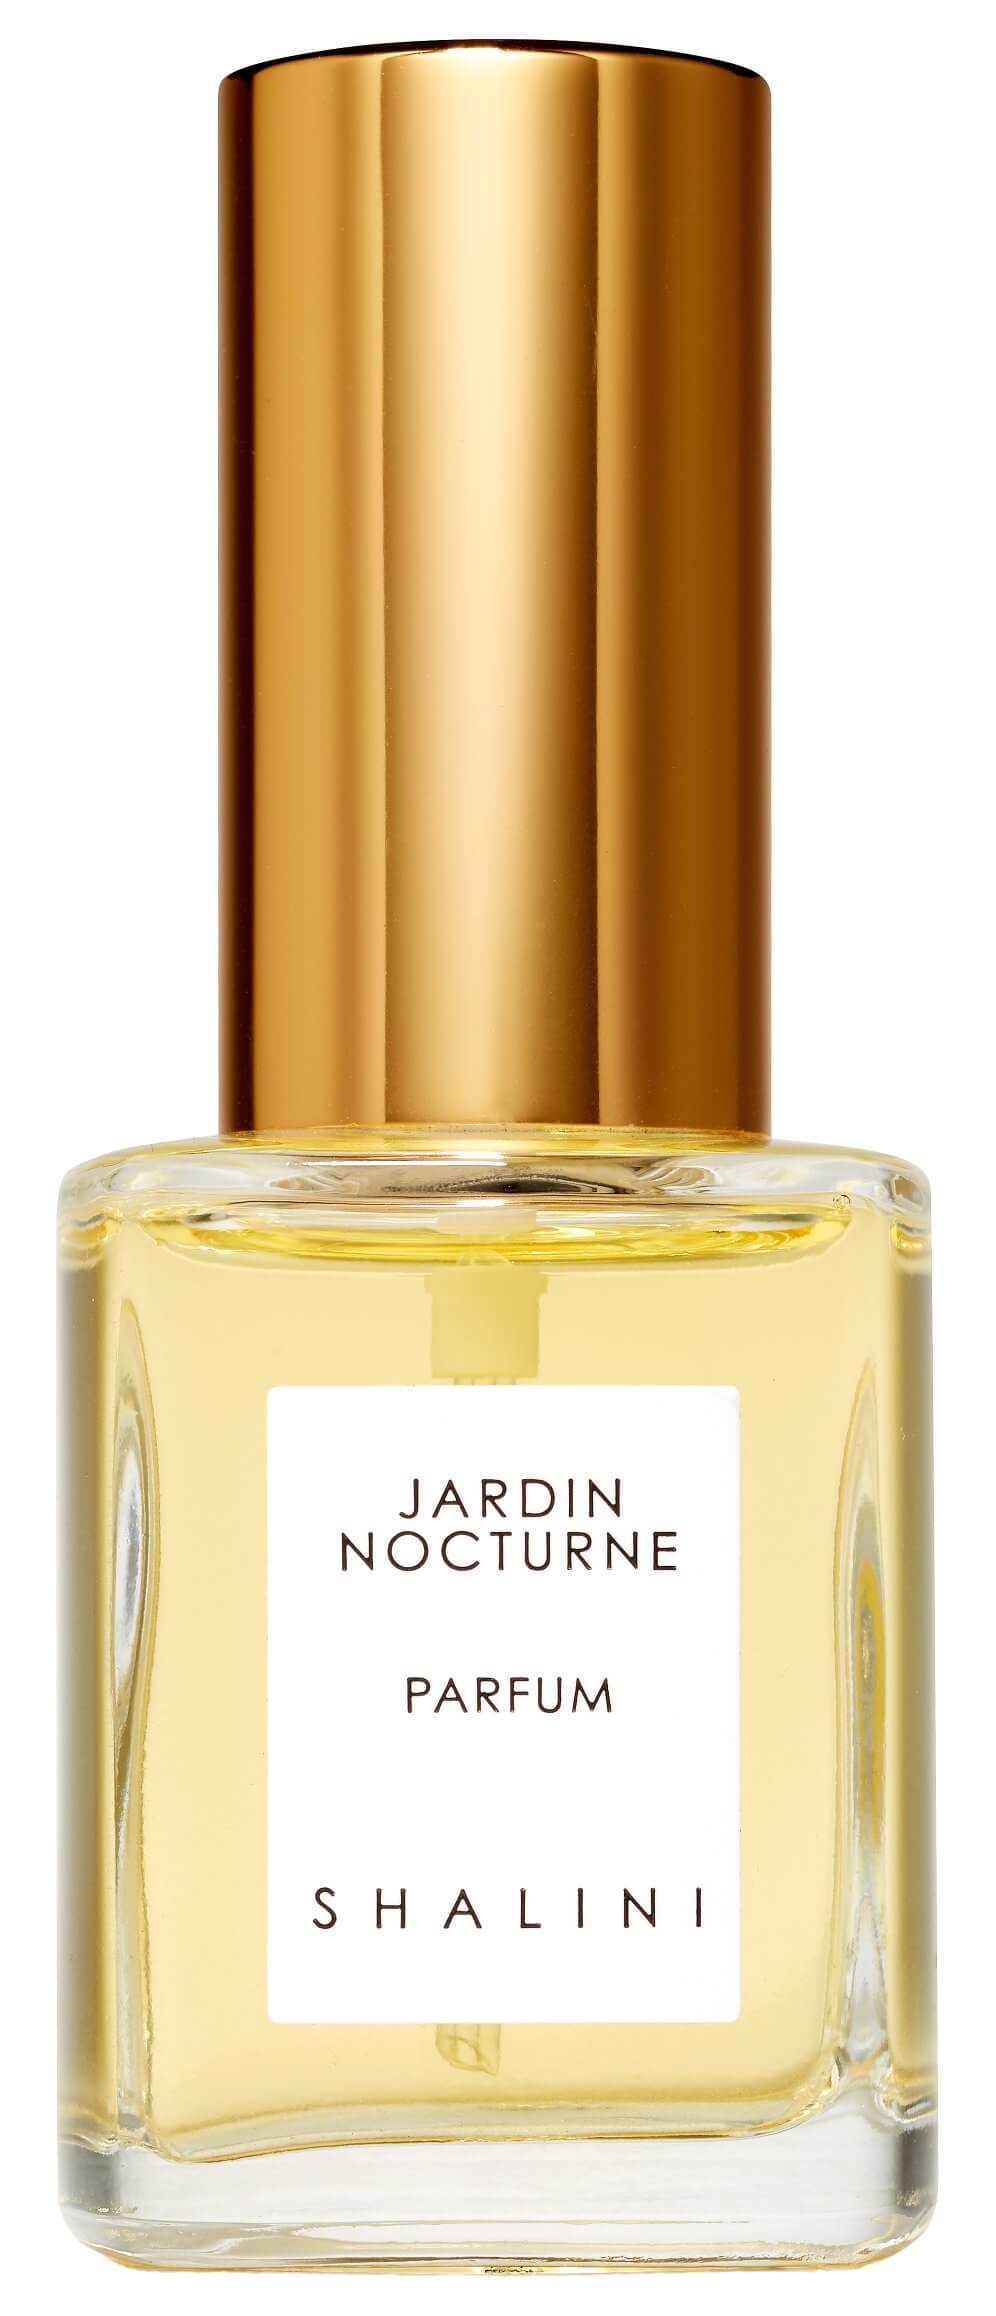 Jardin Nocturne Parfum by S H A L I N I at Indigo Perfumery